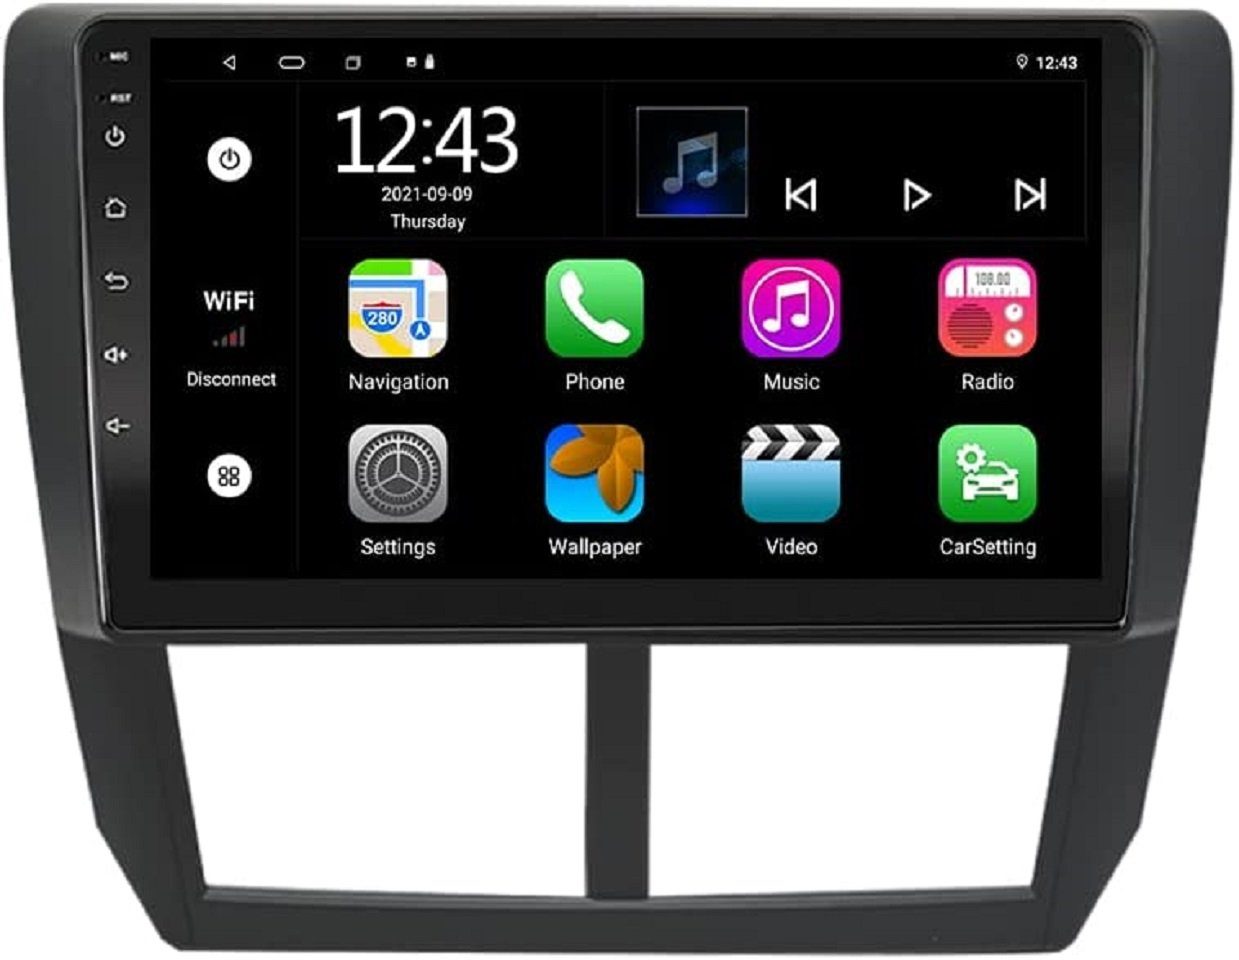 Forester Zoll impreza 2007-2013. 11 9 Einbau-Navigationsgerät Autoradio Android Für Subaru GABITECH GPS